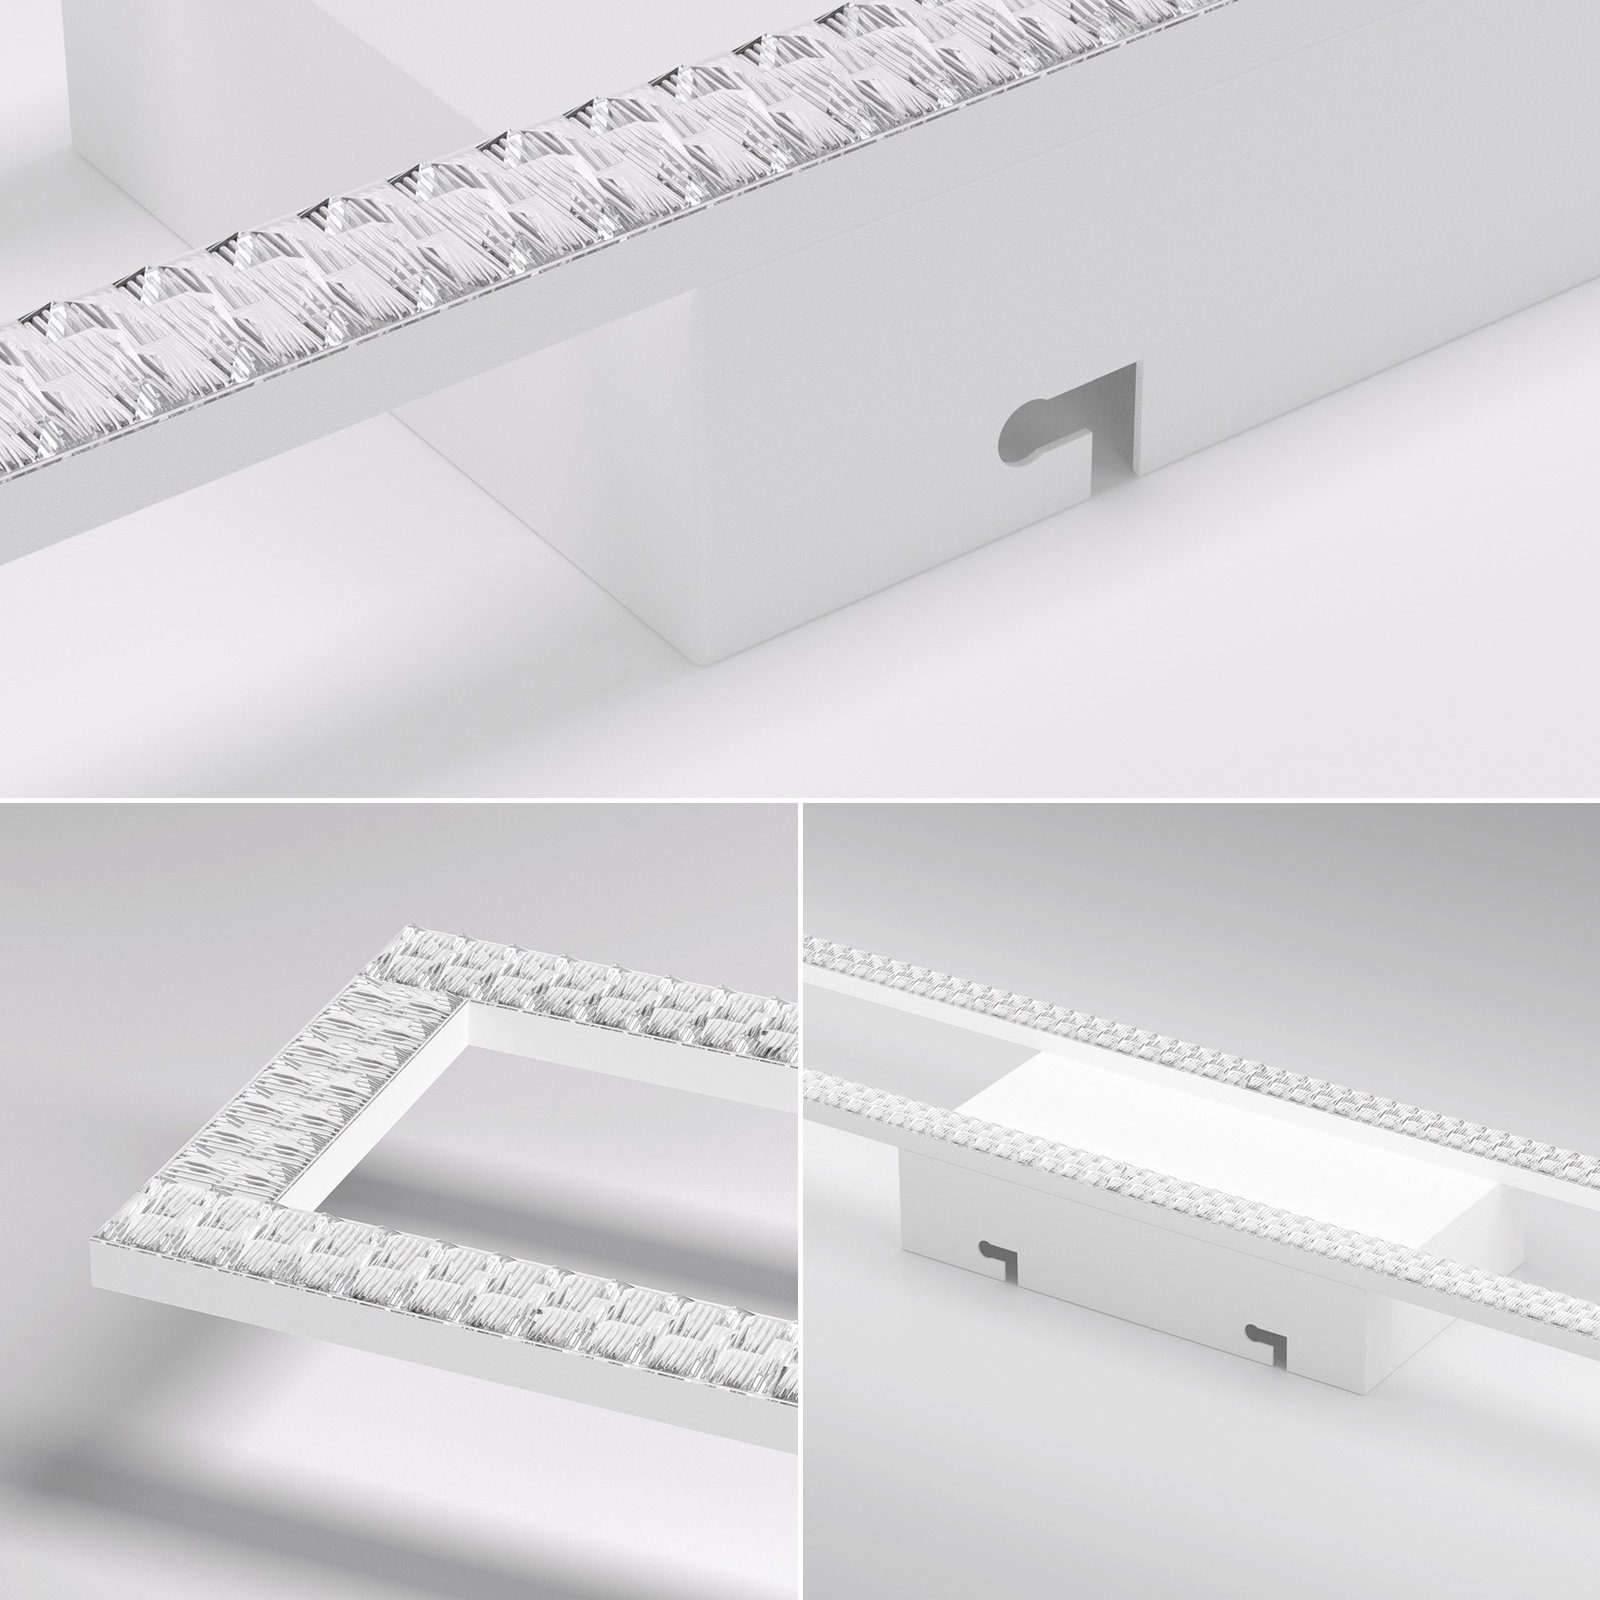 integriert fest Moderne LED Weiß mit Deckenleuchte Fernbedienung Deckenbeleuchtung, dimmbar LED Nettlife W 40